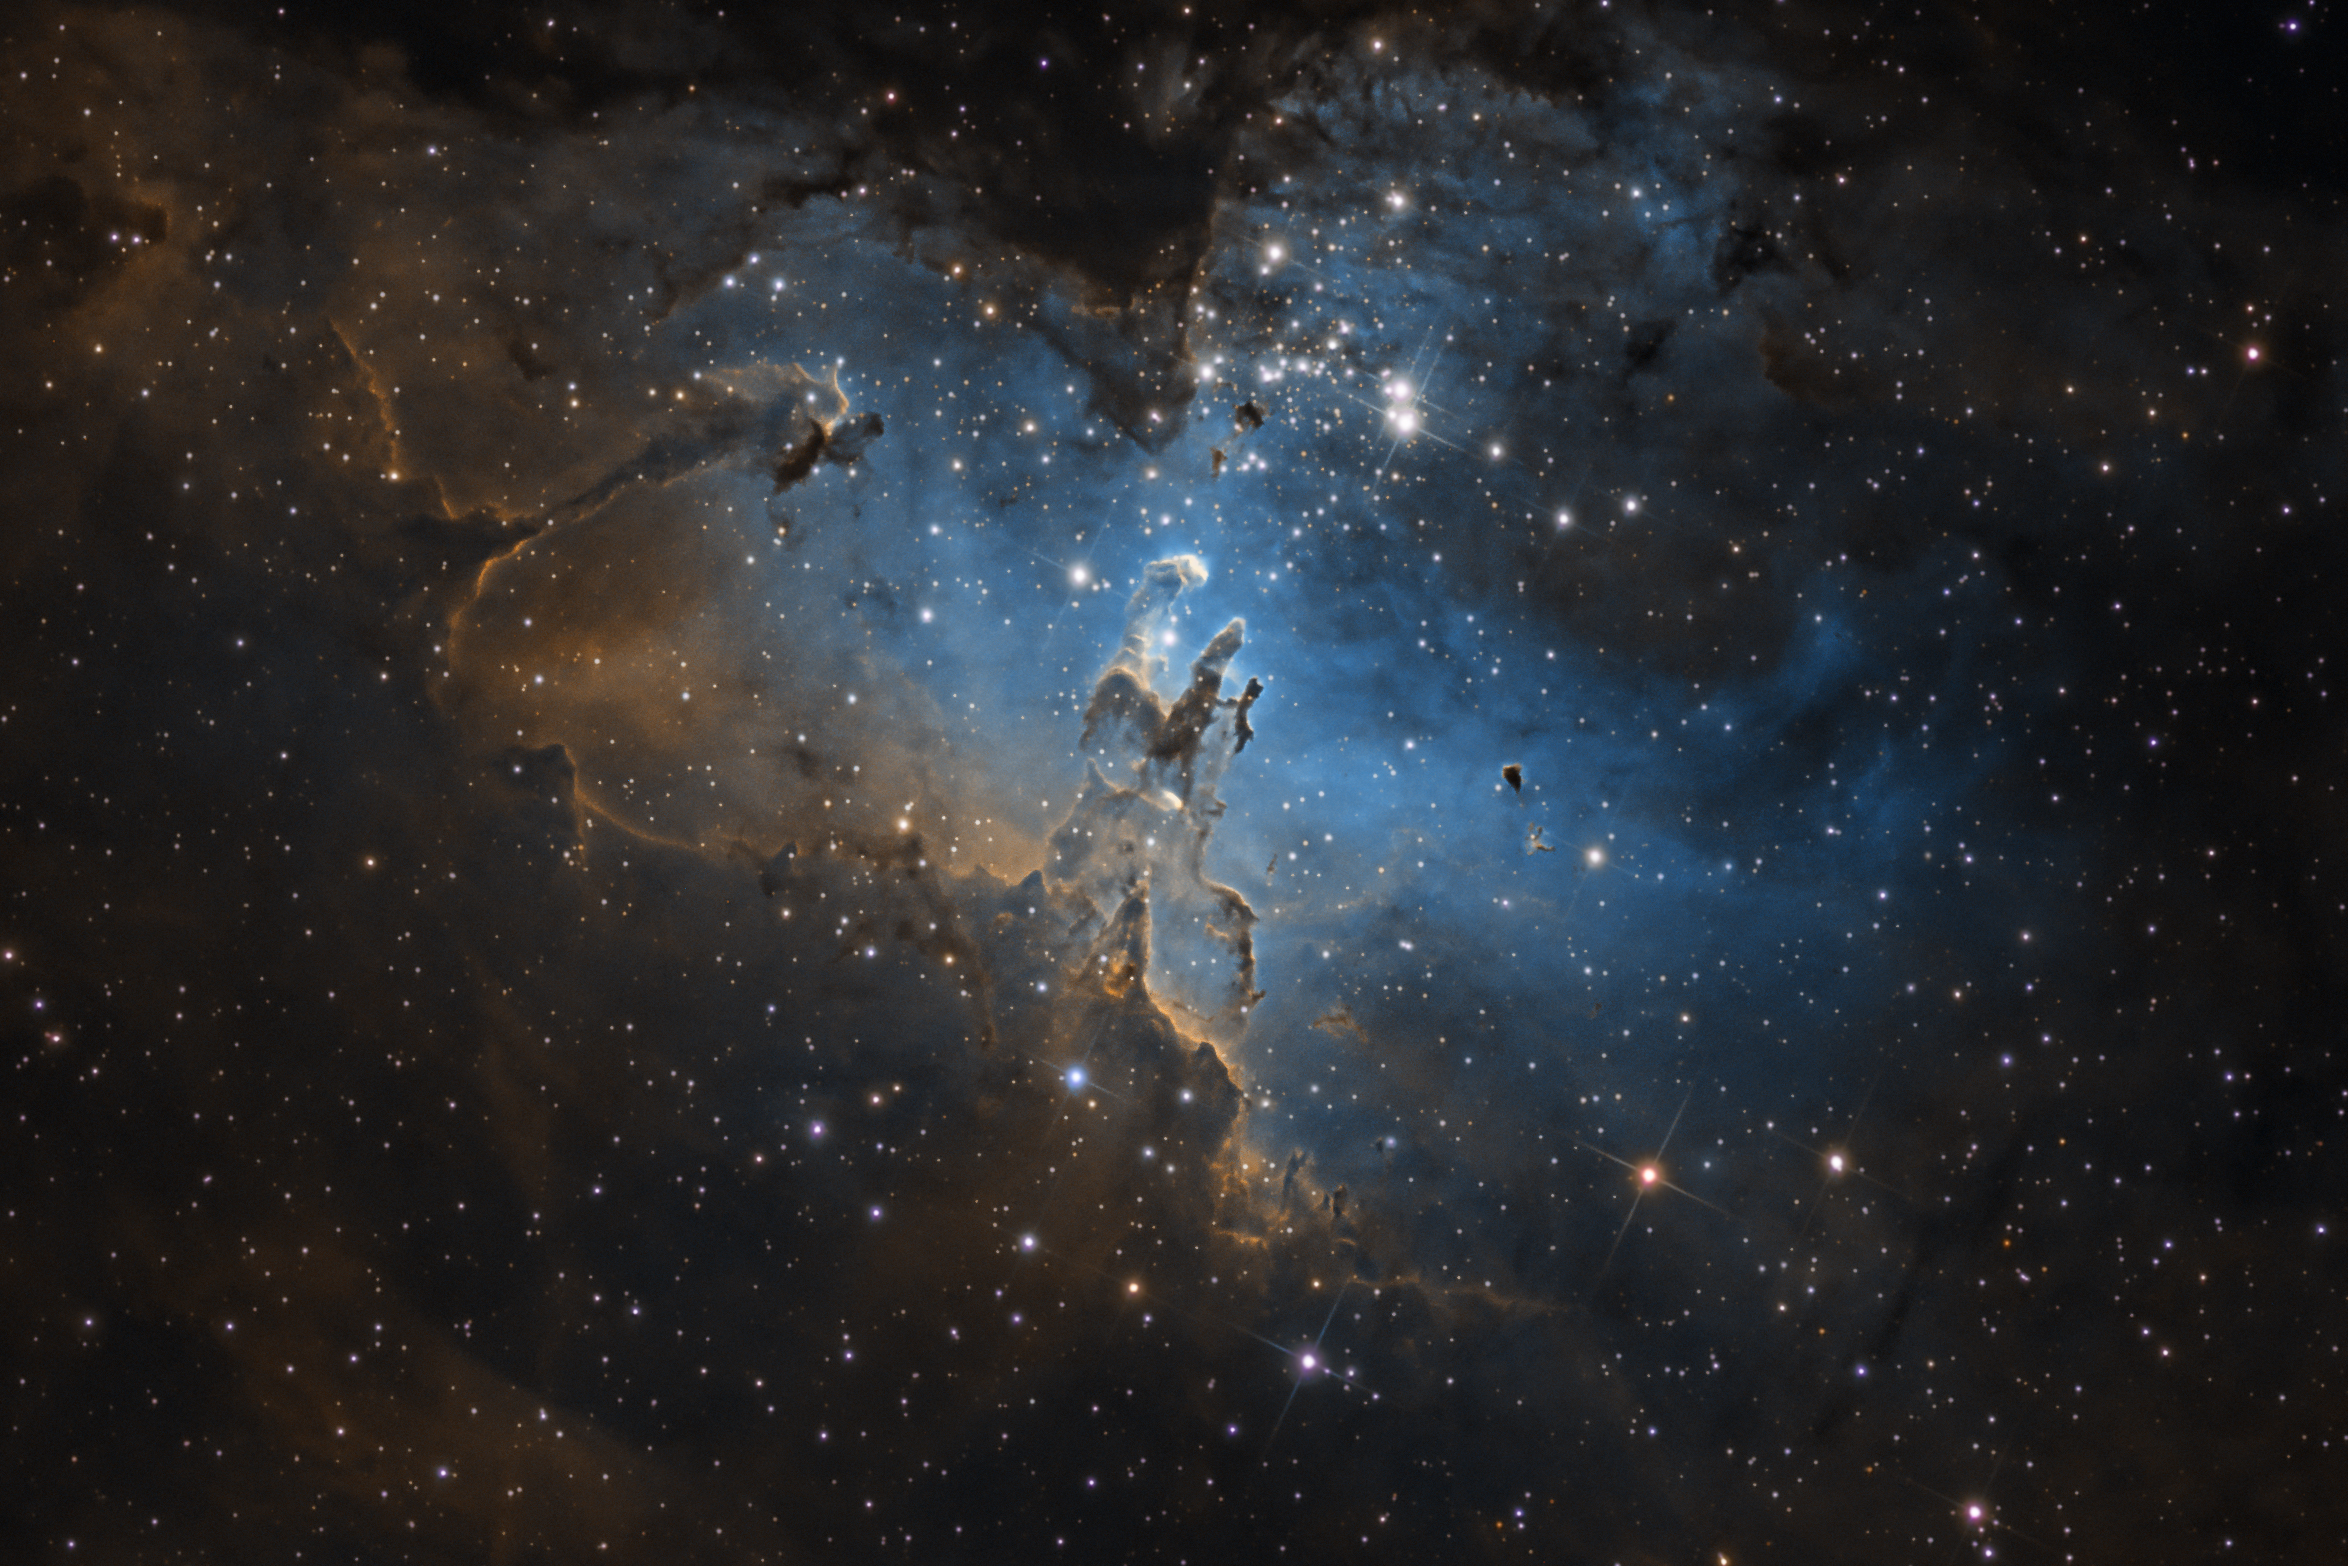 M16 - Eagle nebula